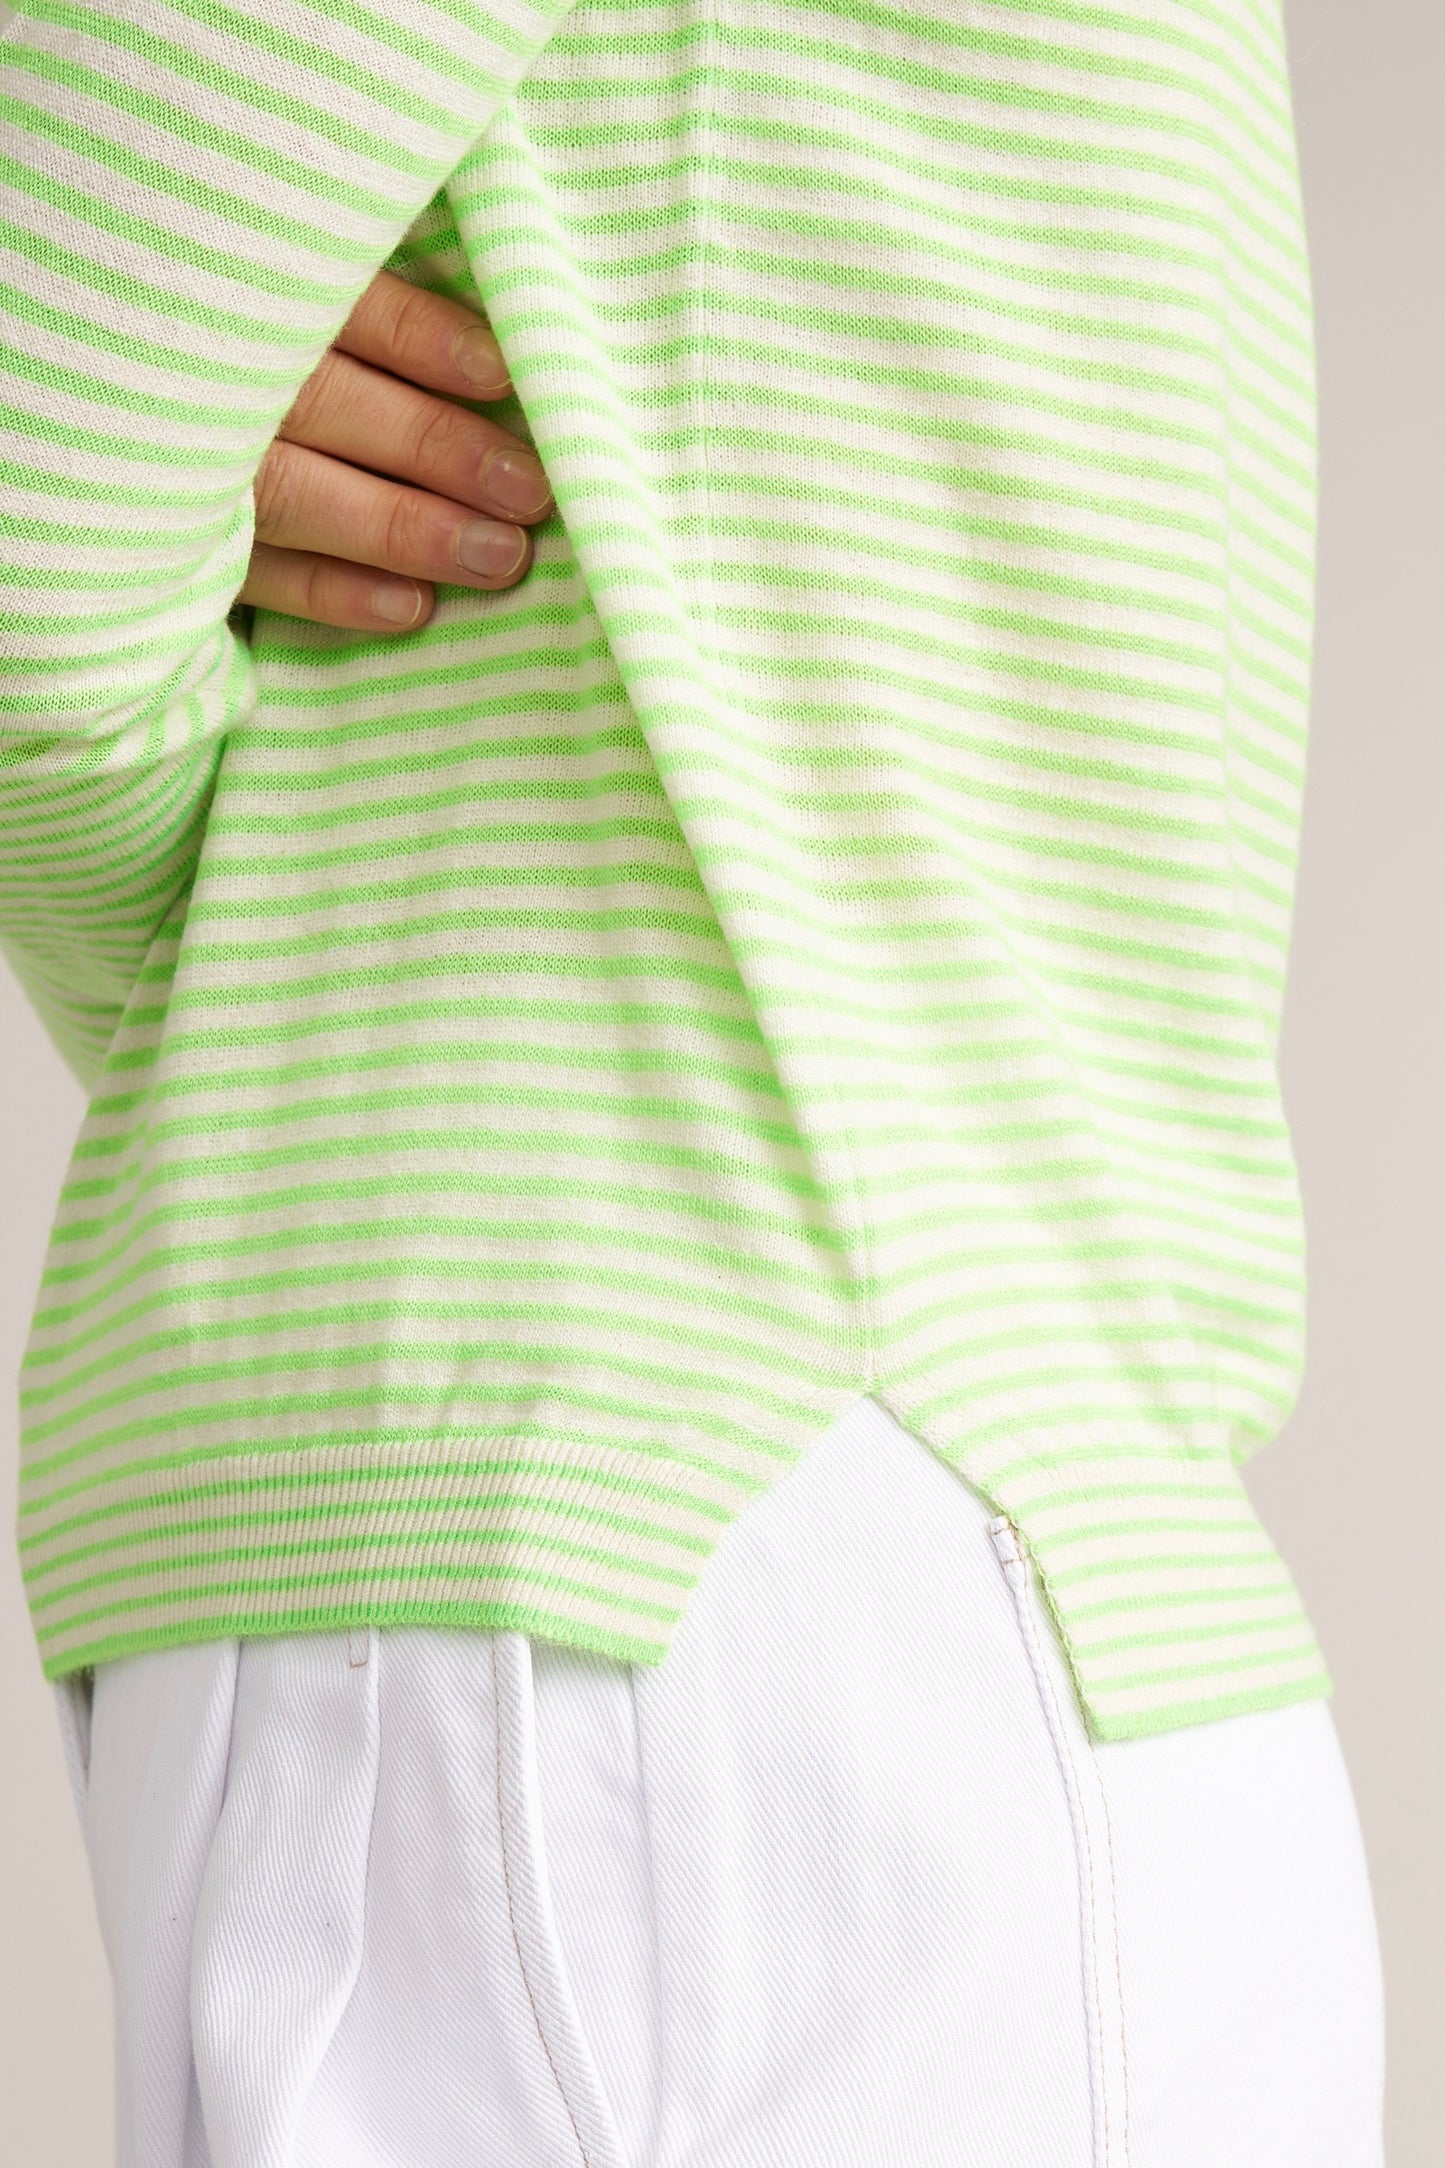 Bellerose - Gop Sweater: Stripe A